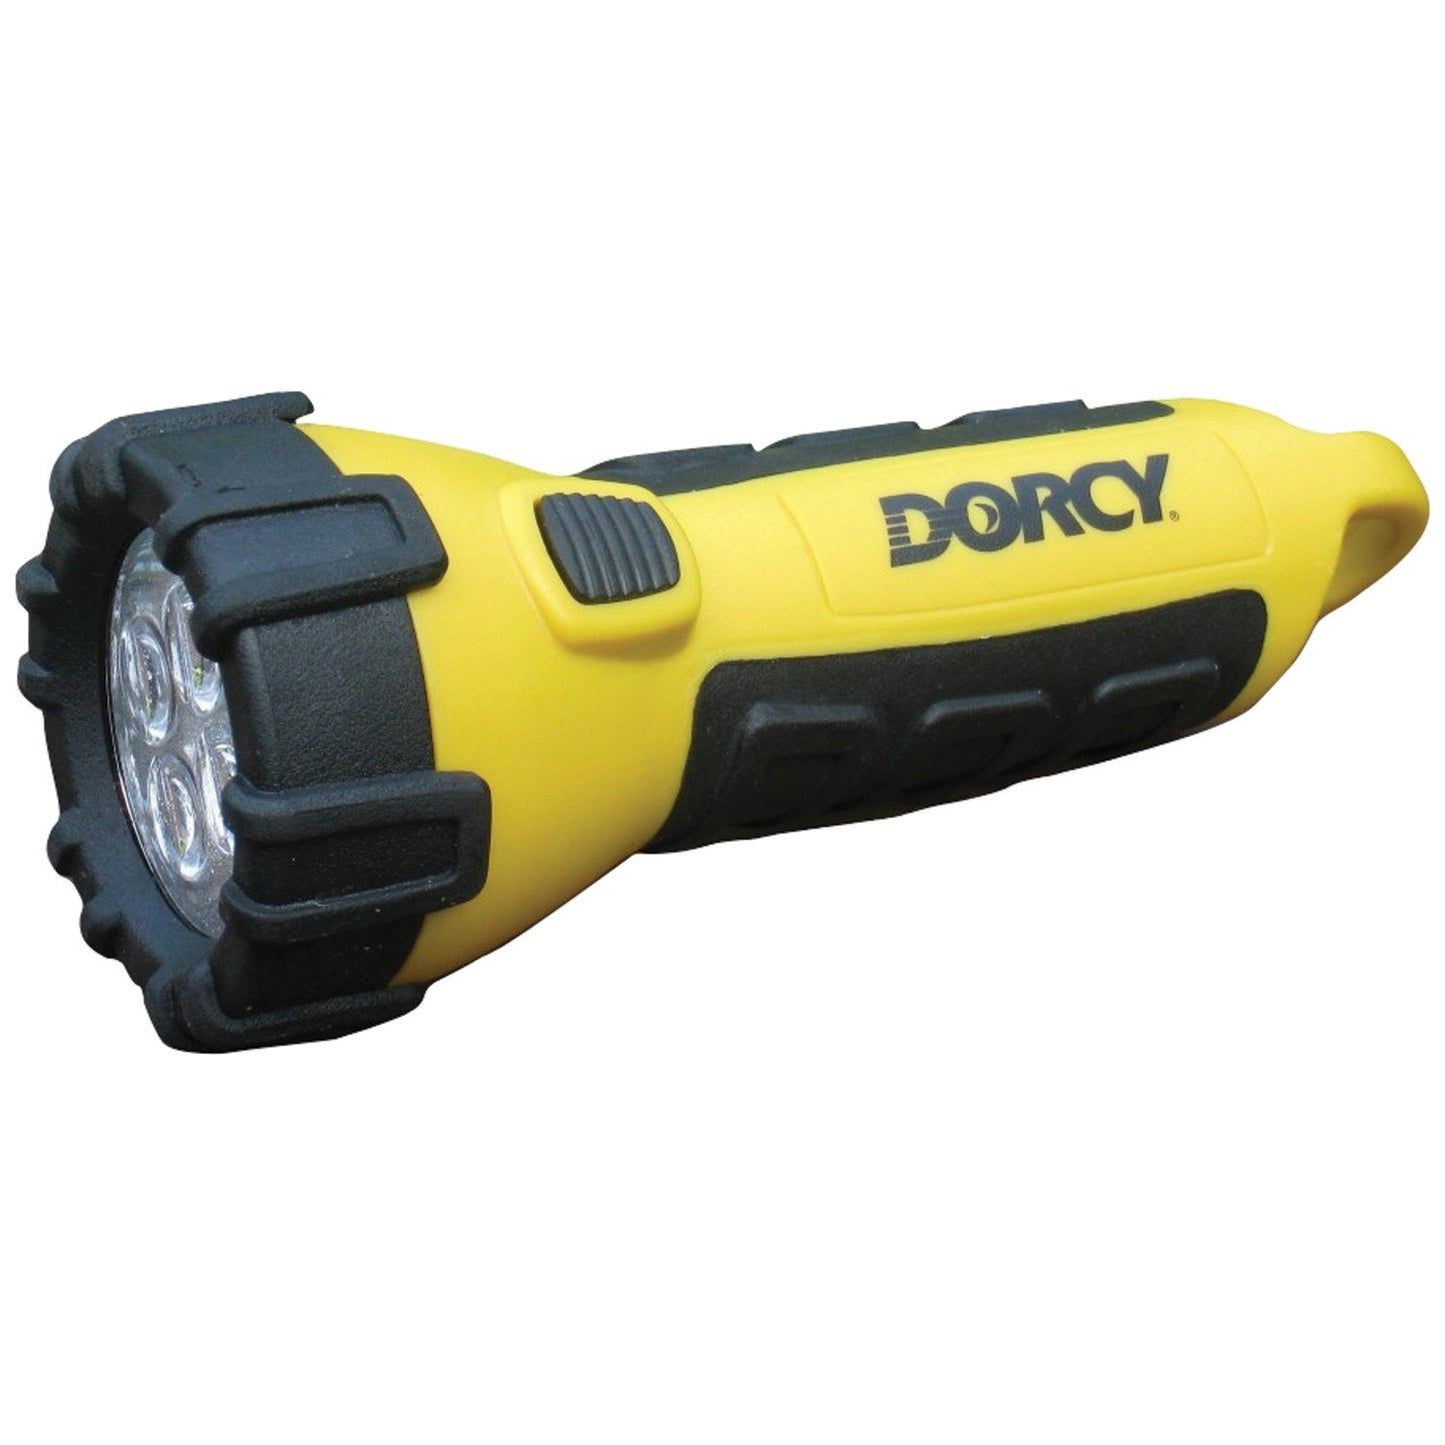 DORCY 41-2510 4-LED Carabiner Waterproof Flashlight (55 Lum)